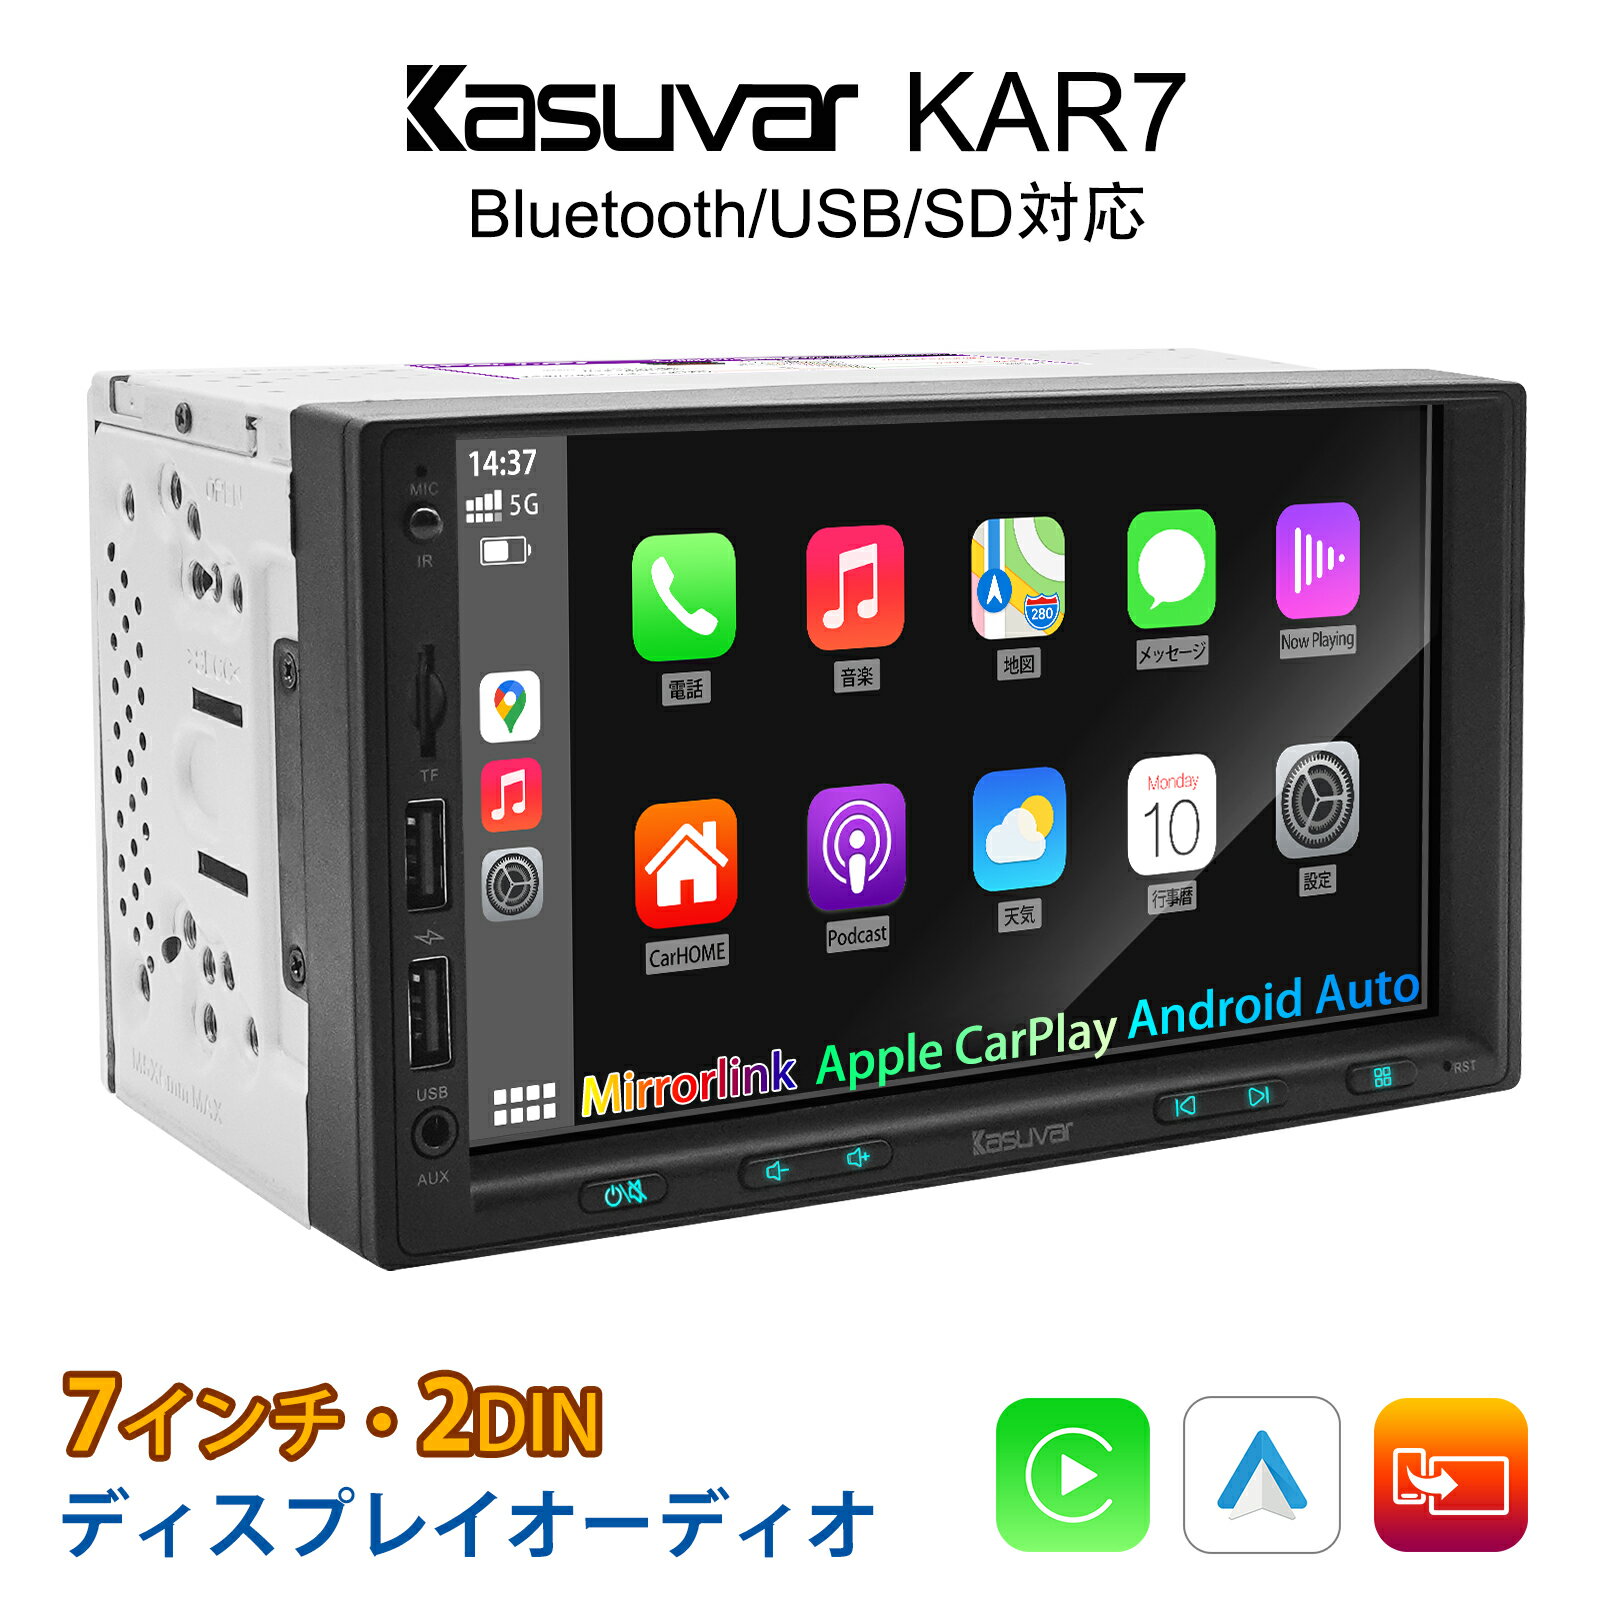 <strong>ディスプレイオーディオ</strong> カーオーディオ 7インチ apple carplay androidauto 2DIN 有線ミラーリング インダッシュ bluetooth通話 RCA映像・音声入力端子 携帯充電 USB/SD/ラジオ対応 バックカメラ連動 後付け 1024×600pixel IPS静電式タッチパネル FM/AM内蔵 KASUVAR KAR7